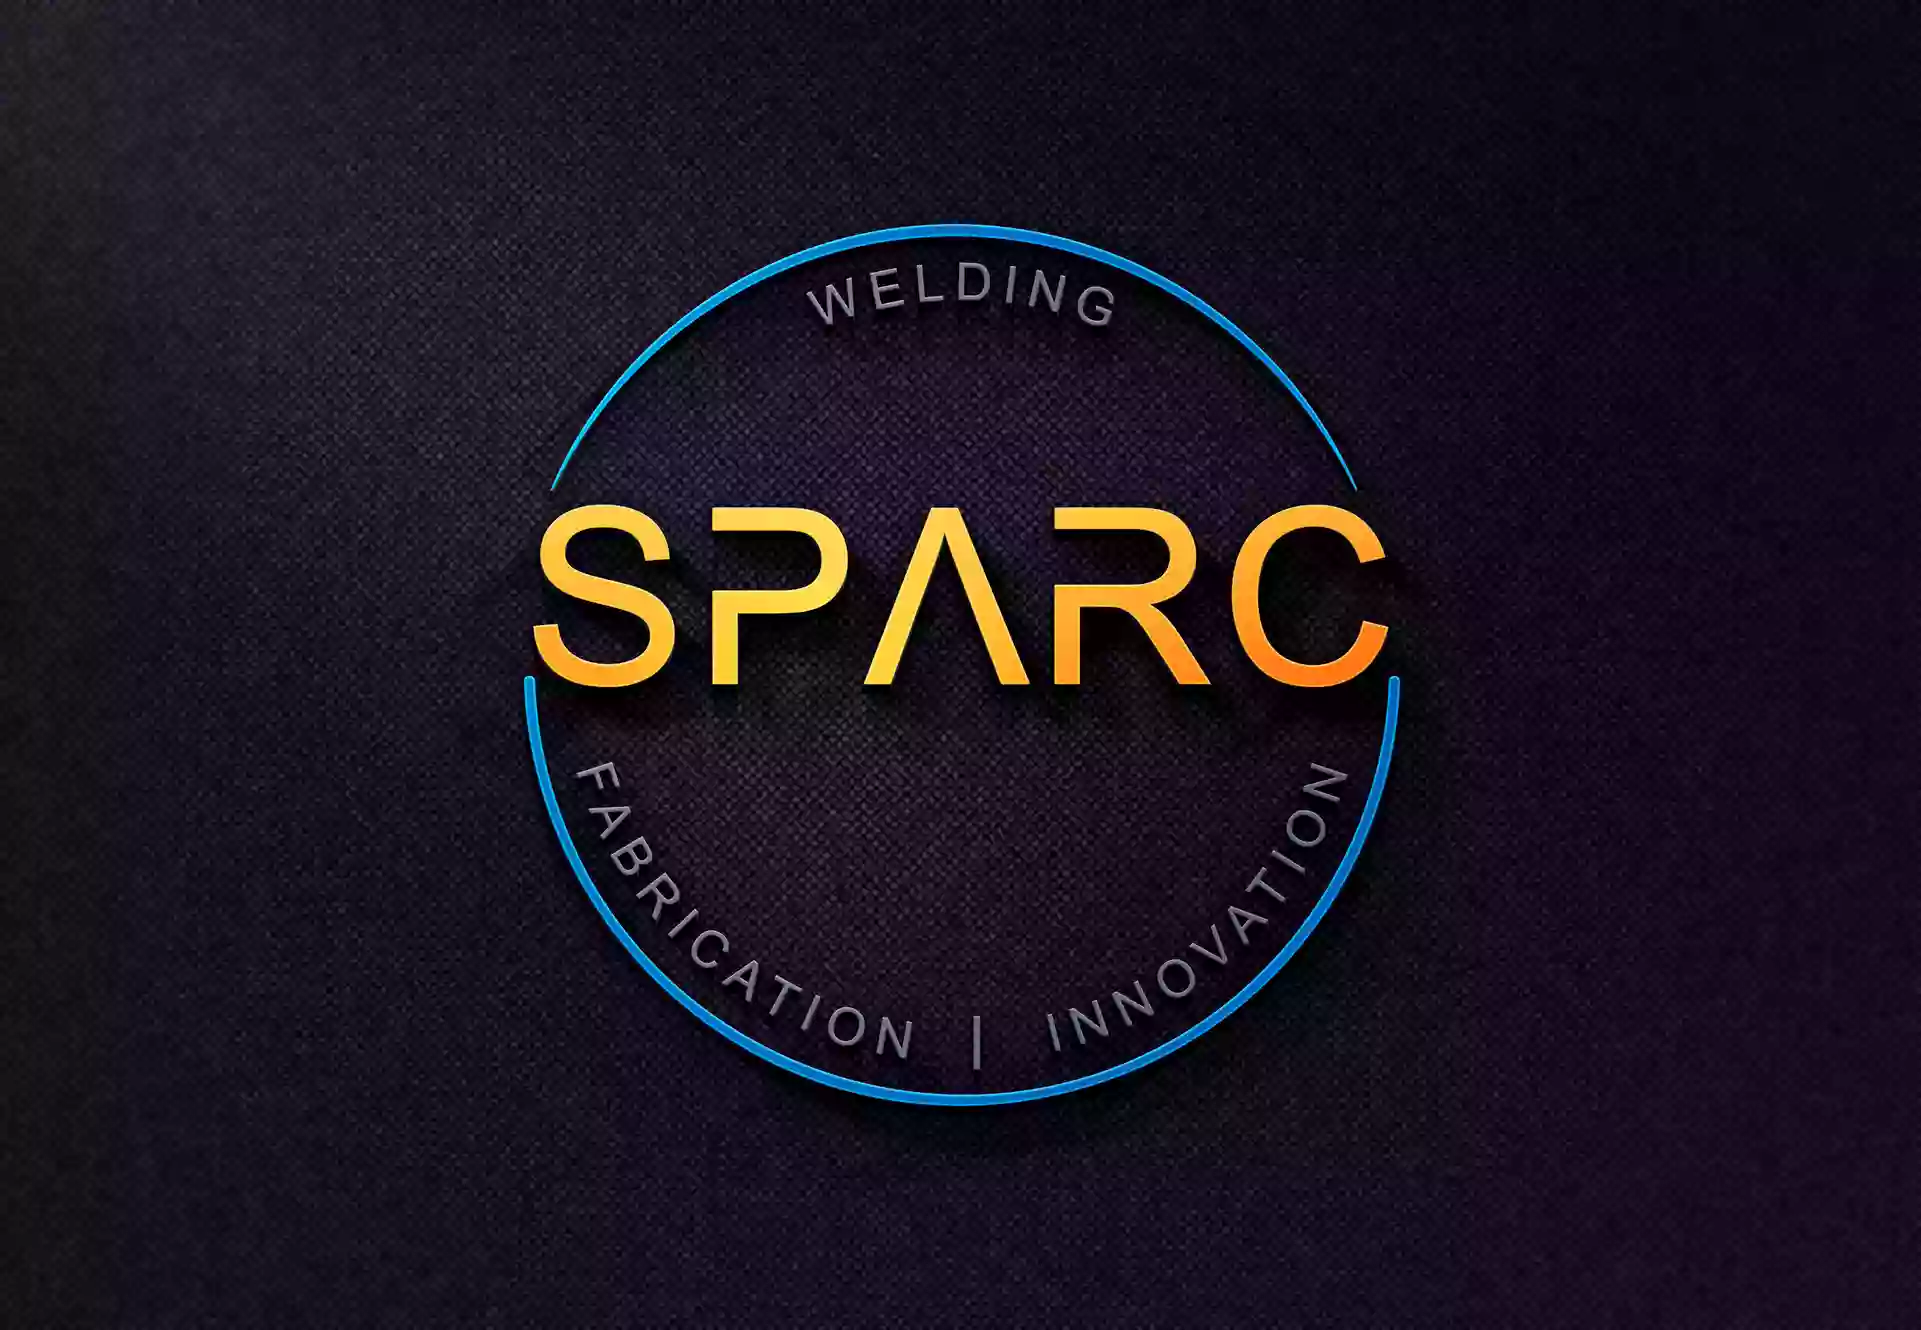 Sparc Welding